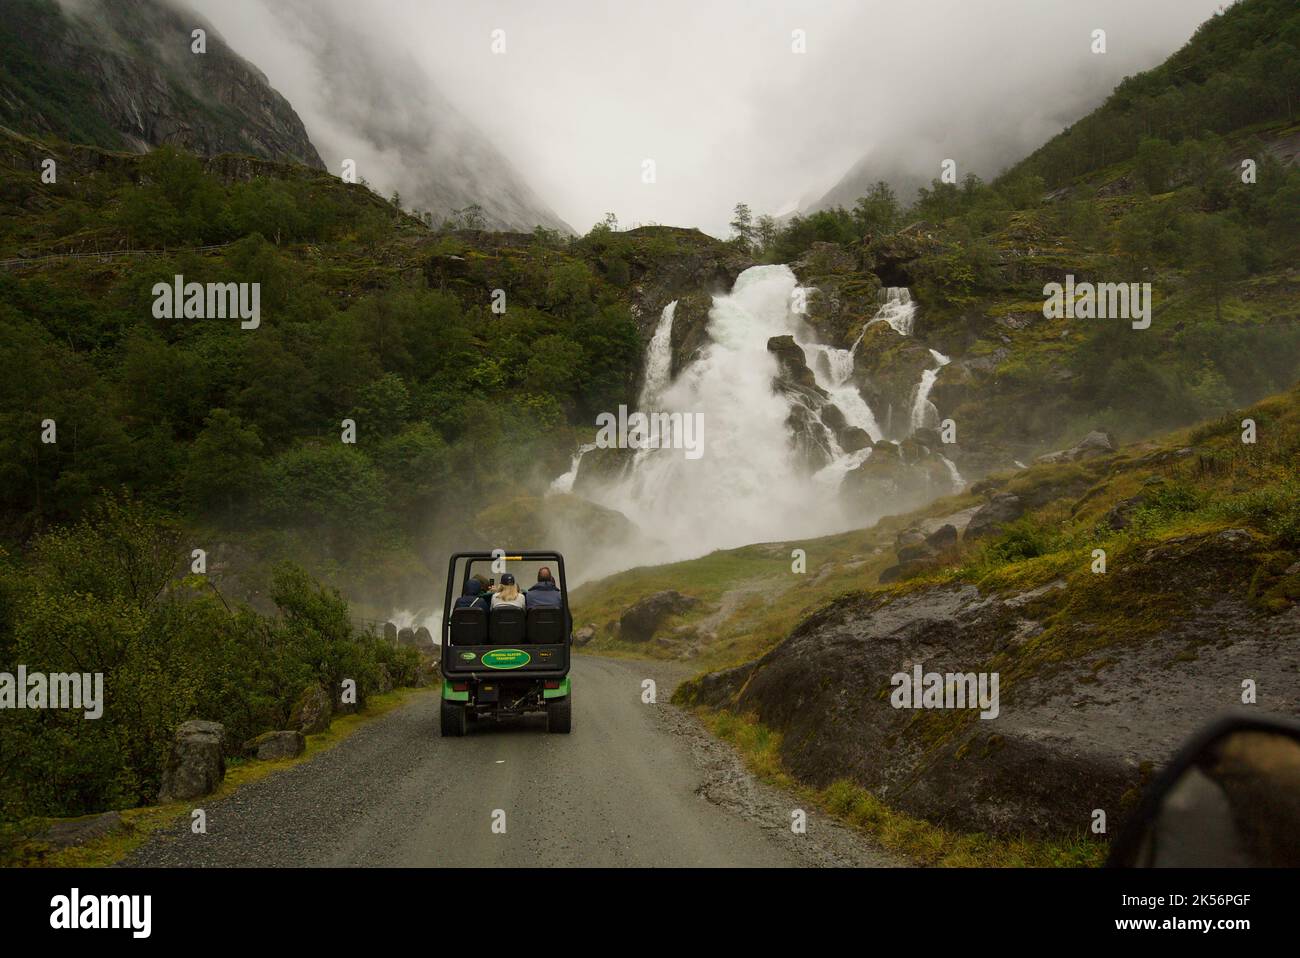 Turismo trasportato al ghiacciaio Briksdal, Briksdalsbreen, in troll cart, troll car, navetta per il ghiacciaio. Guida verso una cascata. Briksdalsbre. Foto Stock